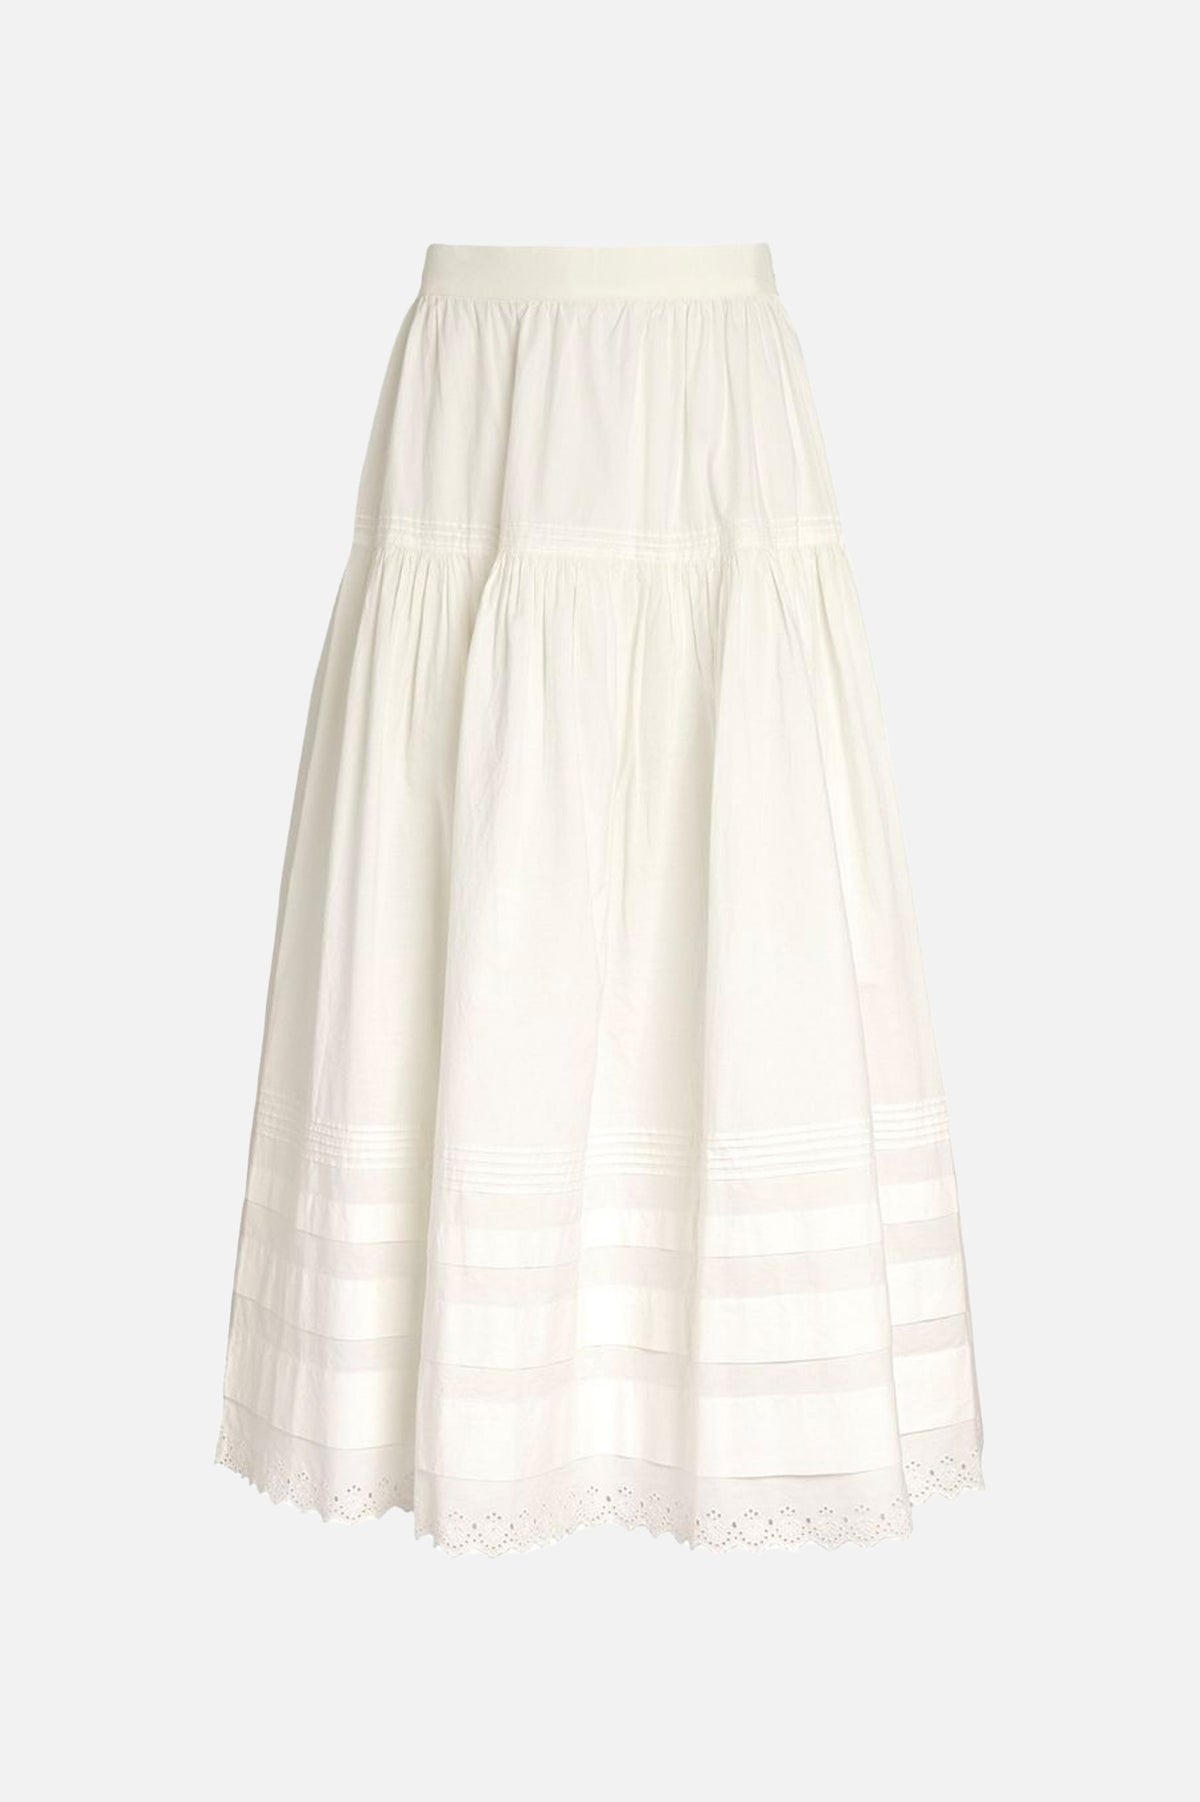 Sebastiane Cotton Skirt in Powder